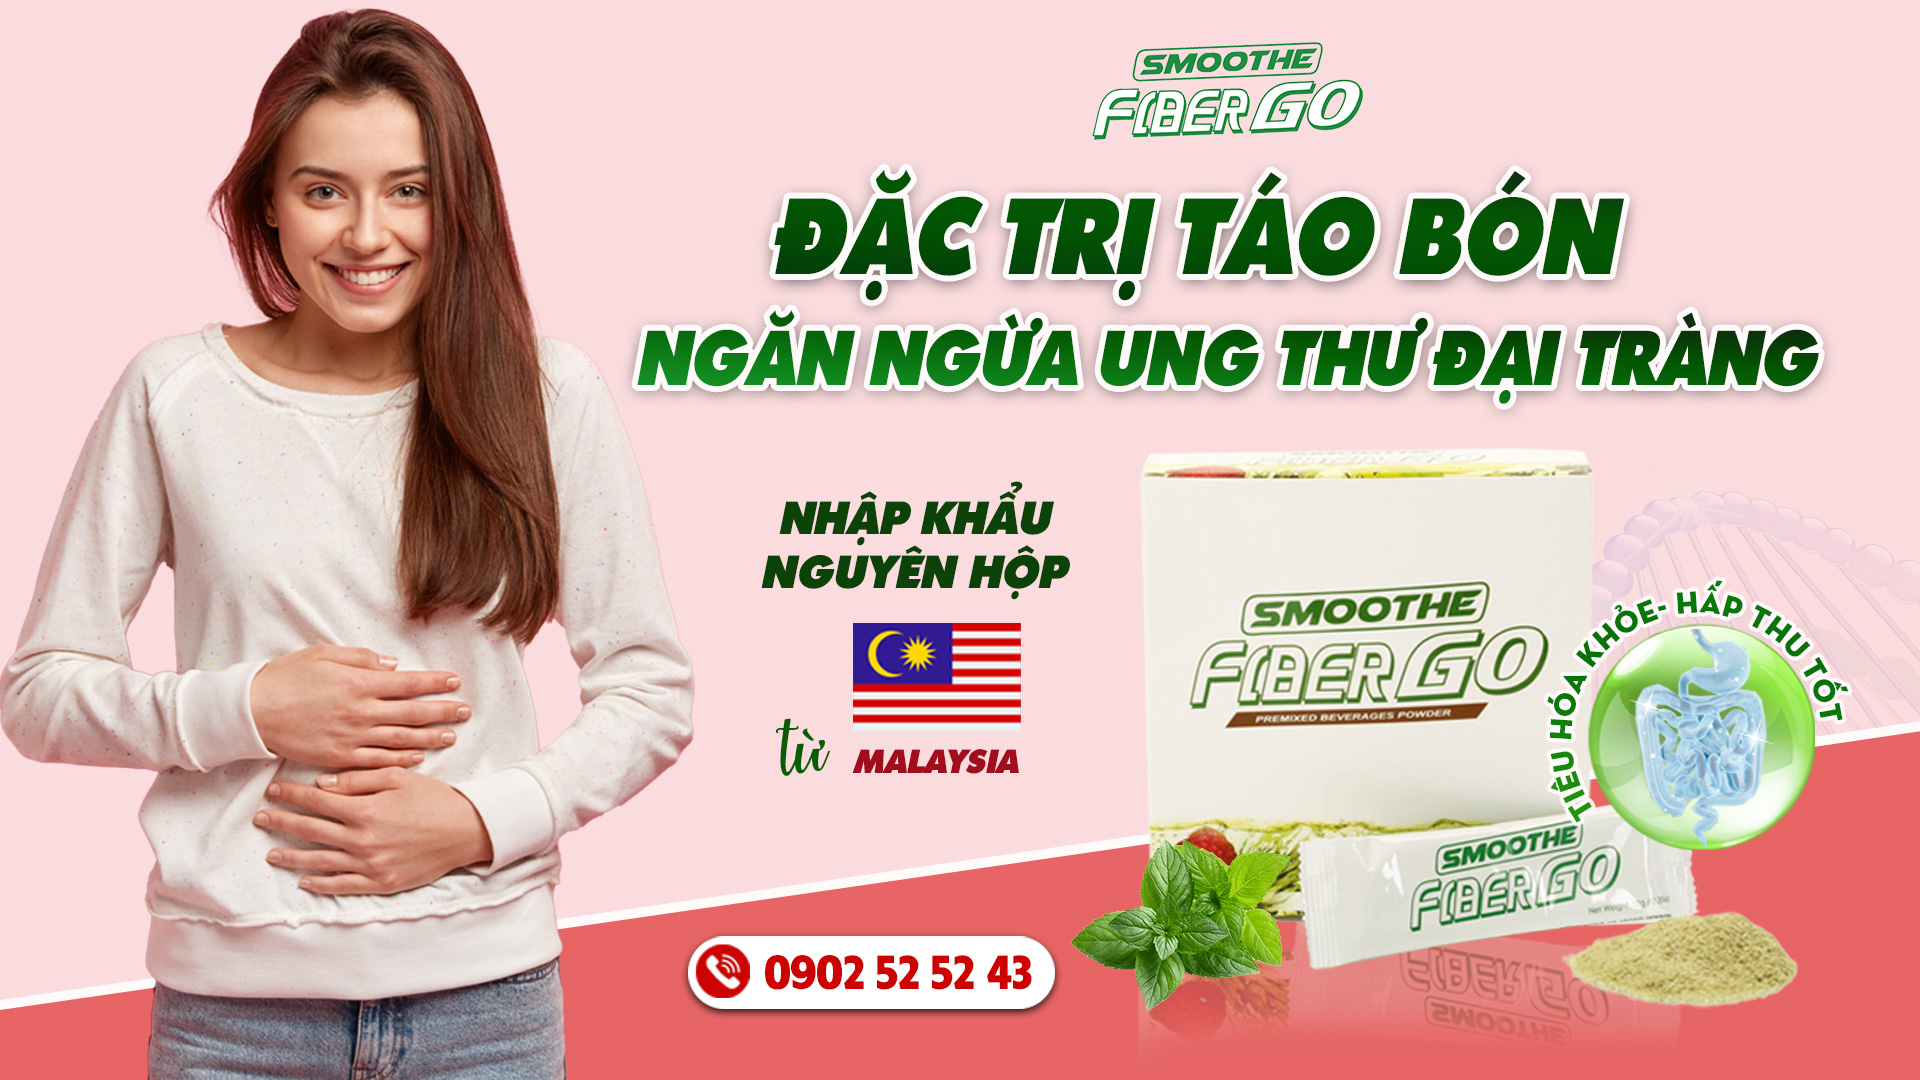 Thai-doc-ruot-smoothe-fibergo-dac-tri-tao-bon-ngan-ngua-ung-thu-dai-trang-3